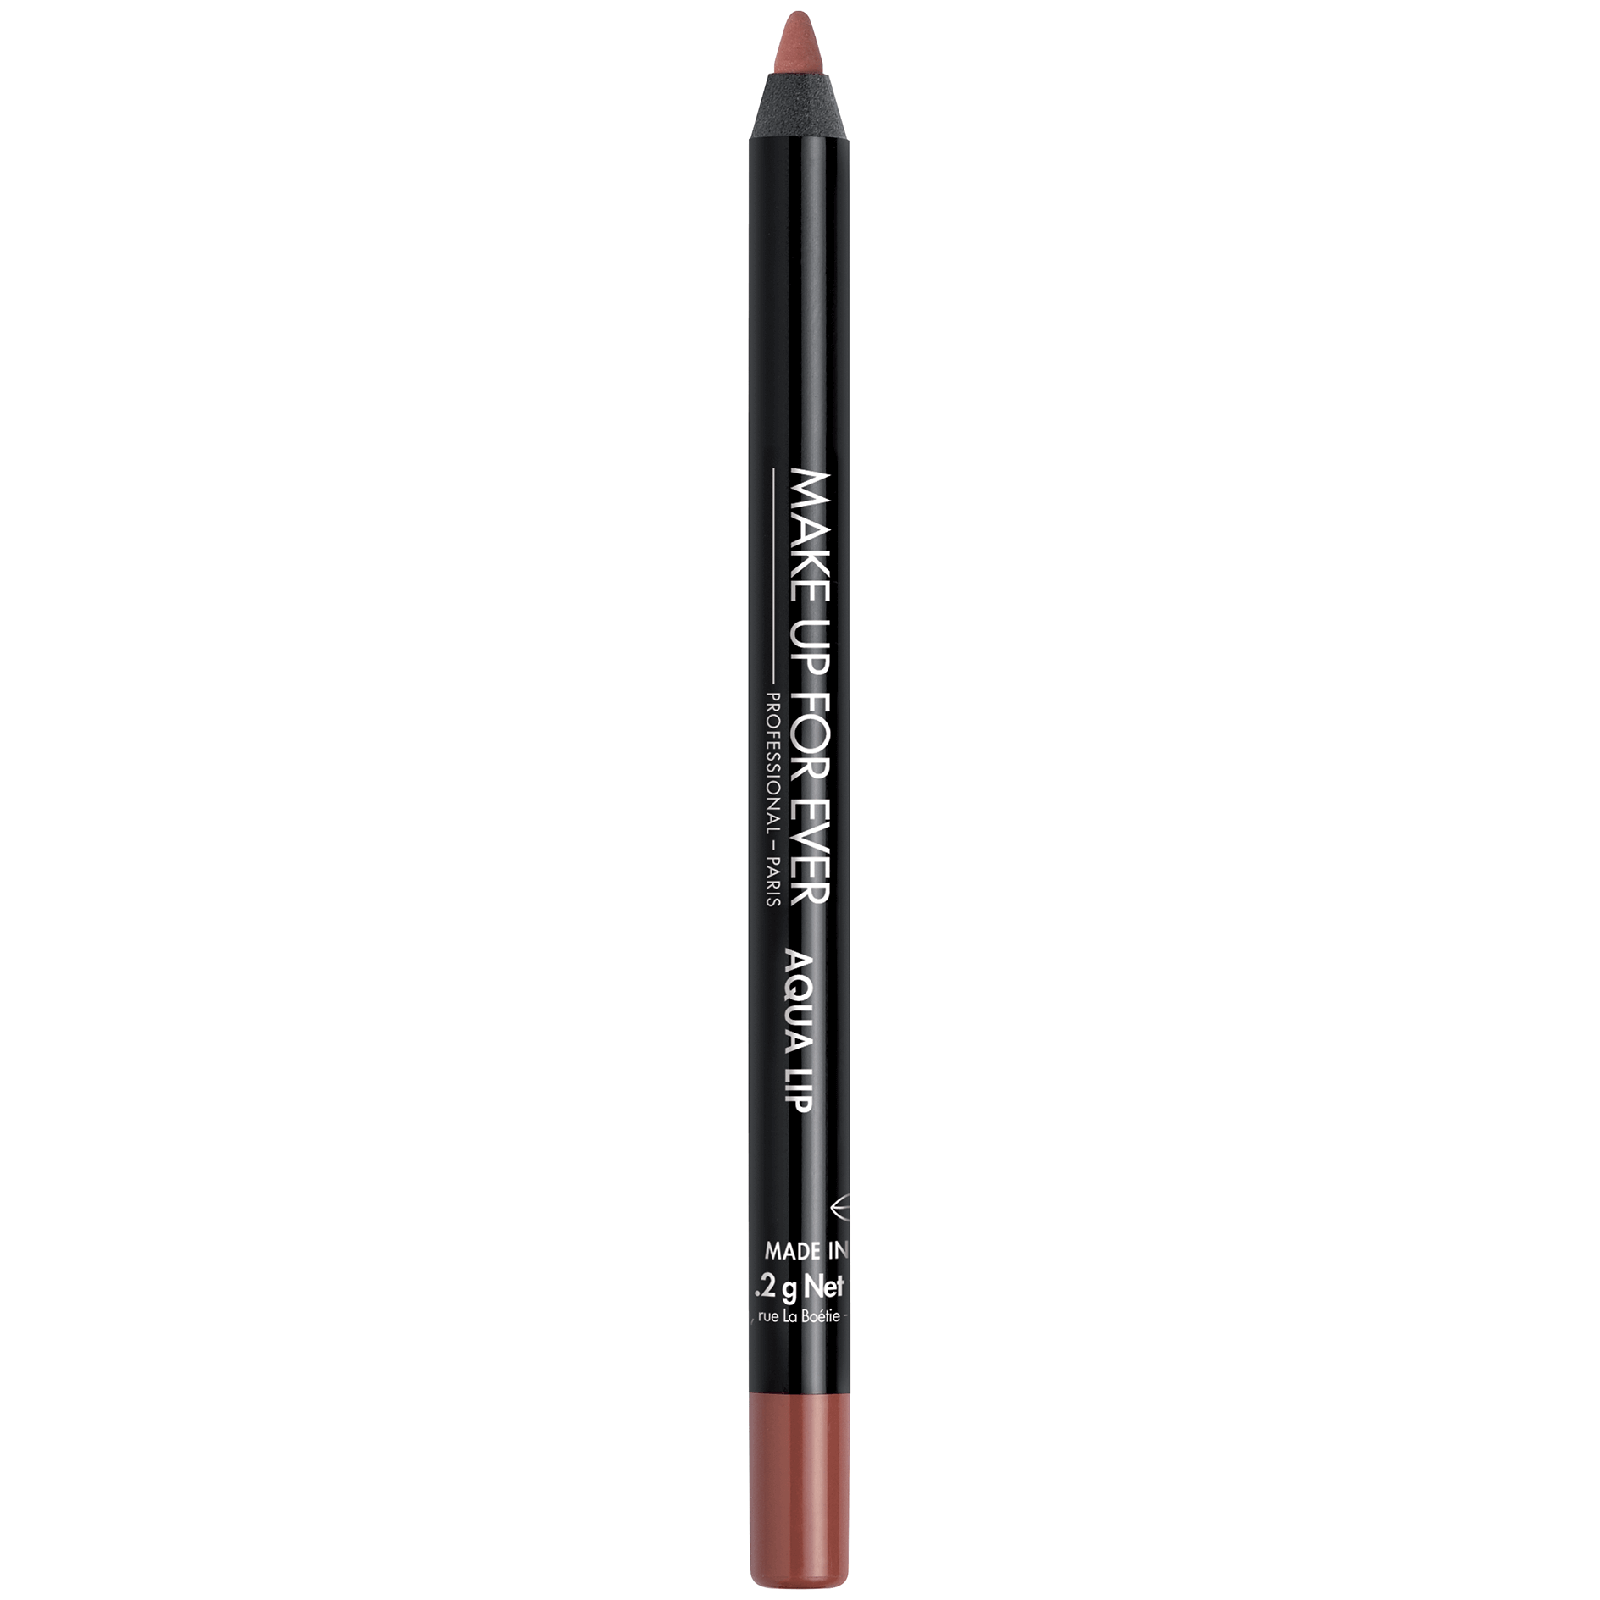 MAKE UP FOR EVER aqua Lip Waterproof Lipliner Pencil 1.2g (Various Shades) - - 3C-Medium Neutral Beige